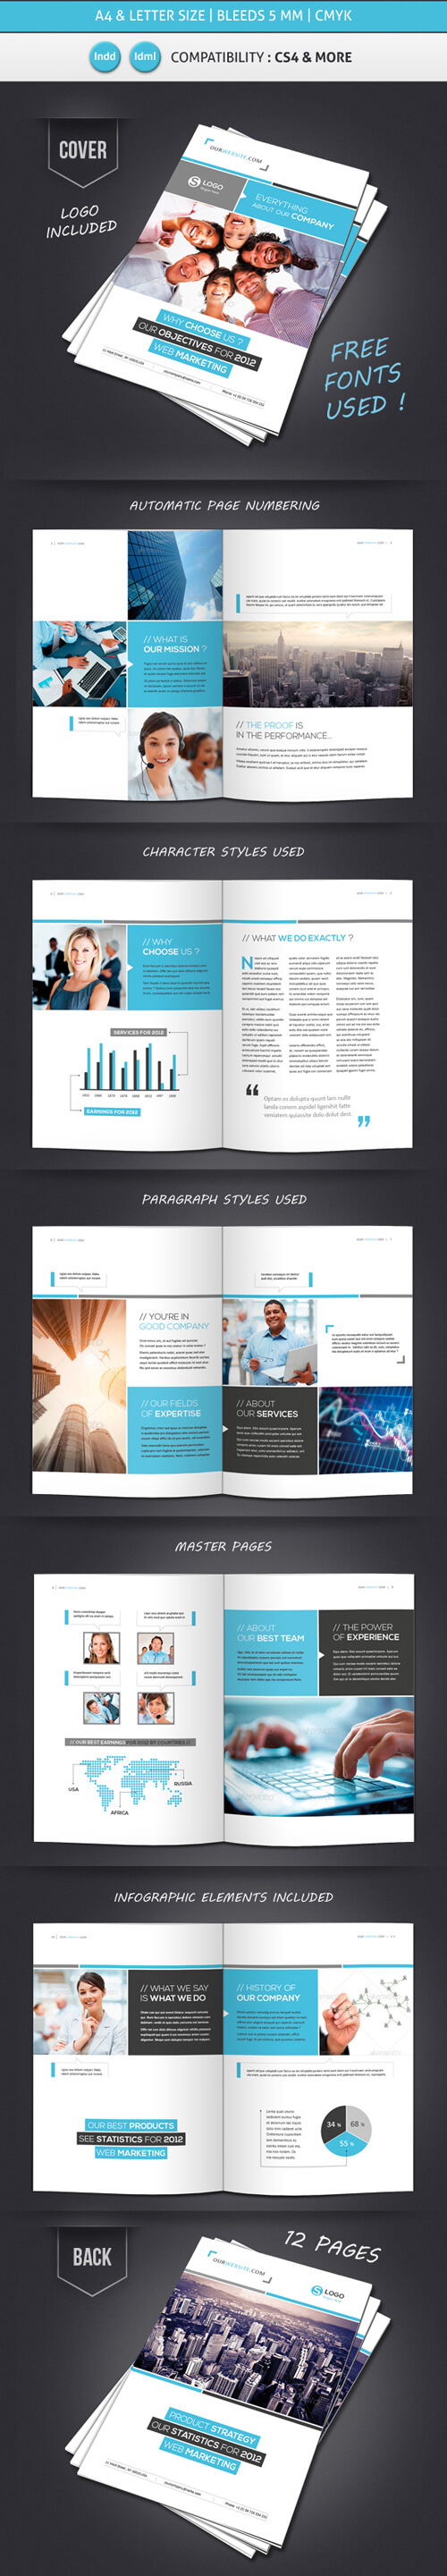 Professional Brochure Designs | Design | Graphic Design Junction Regarding 12 Page Brochure Template